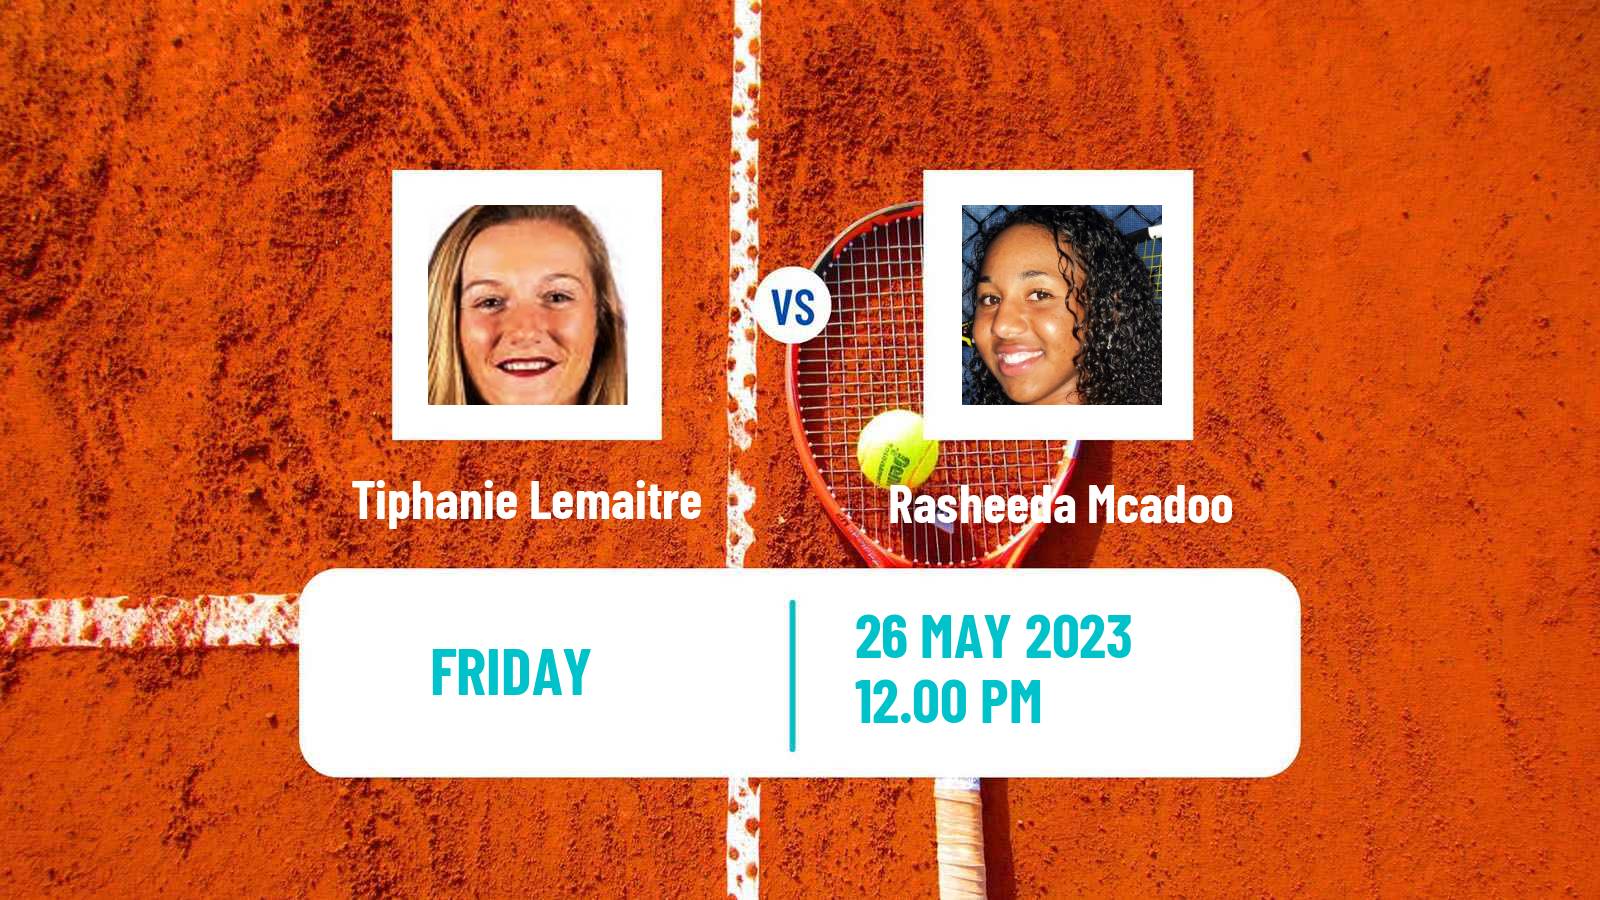 Tennis ITF W15 Huntsville Al Women Tiphanie Lemaitre - Rasheeda Mcadoo